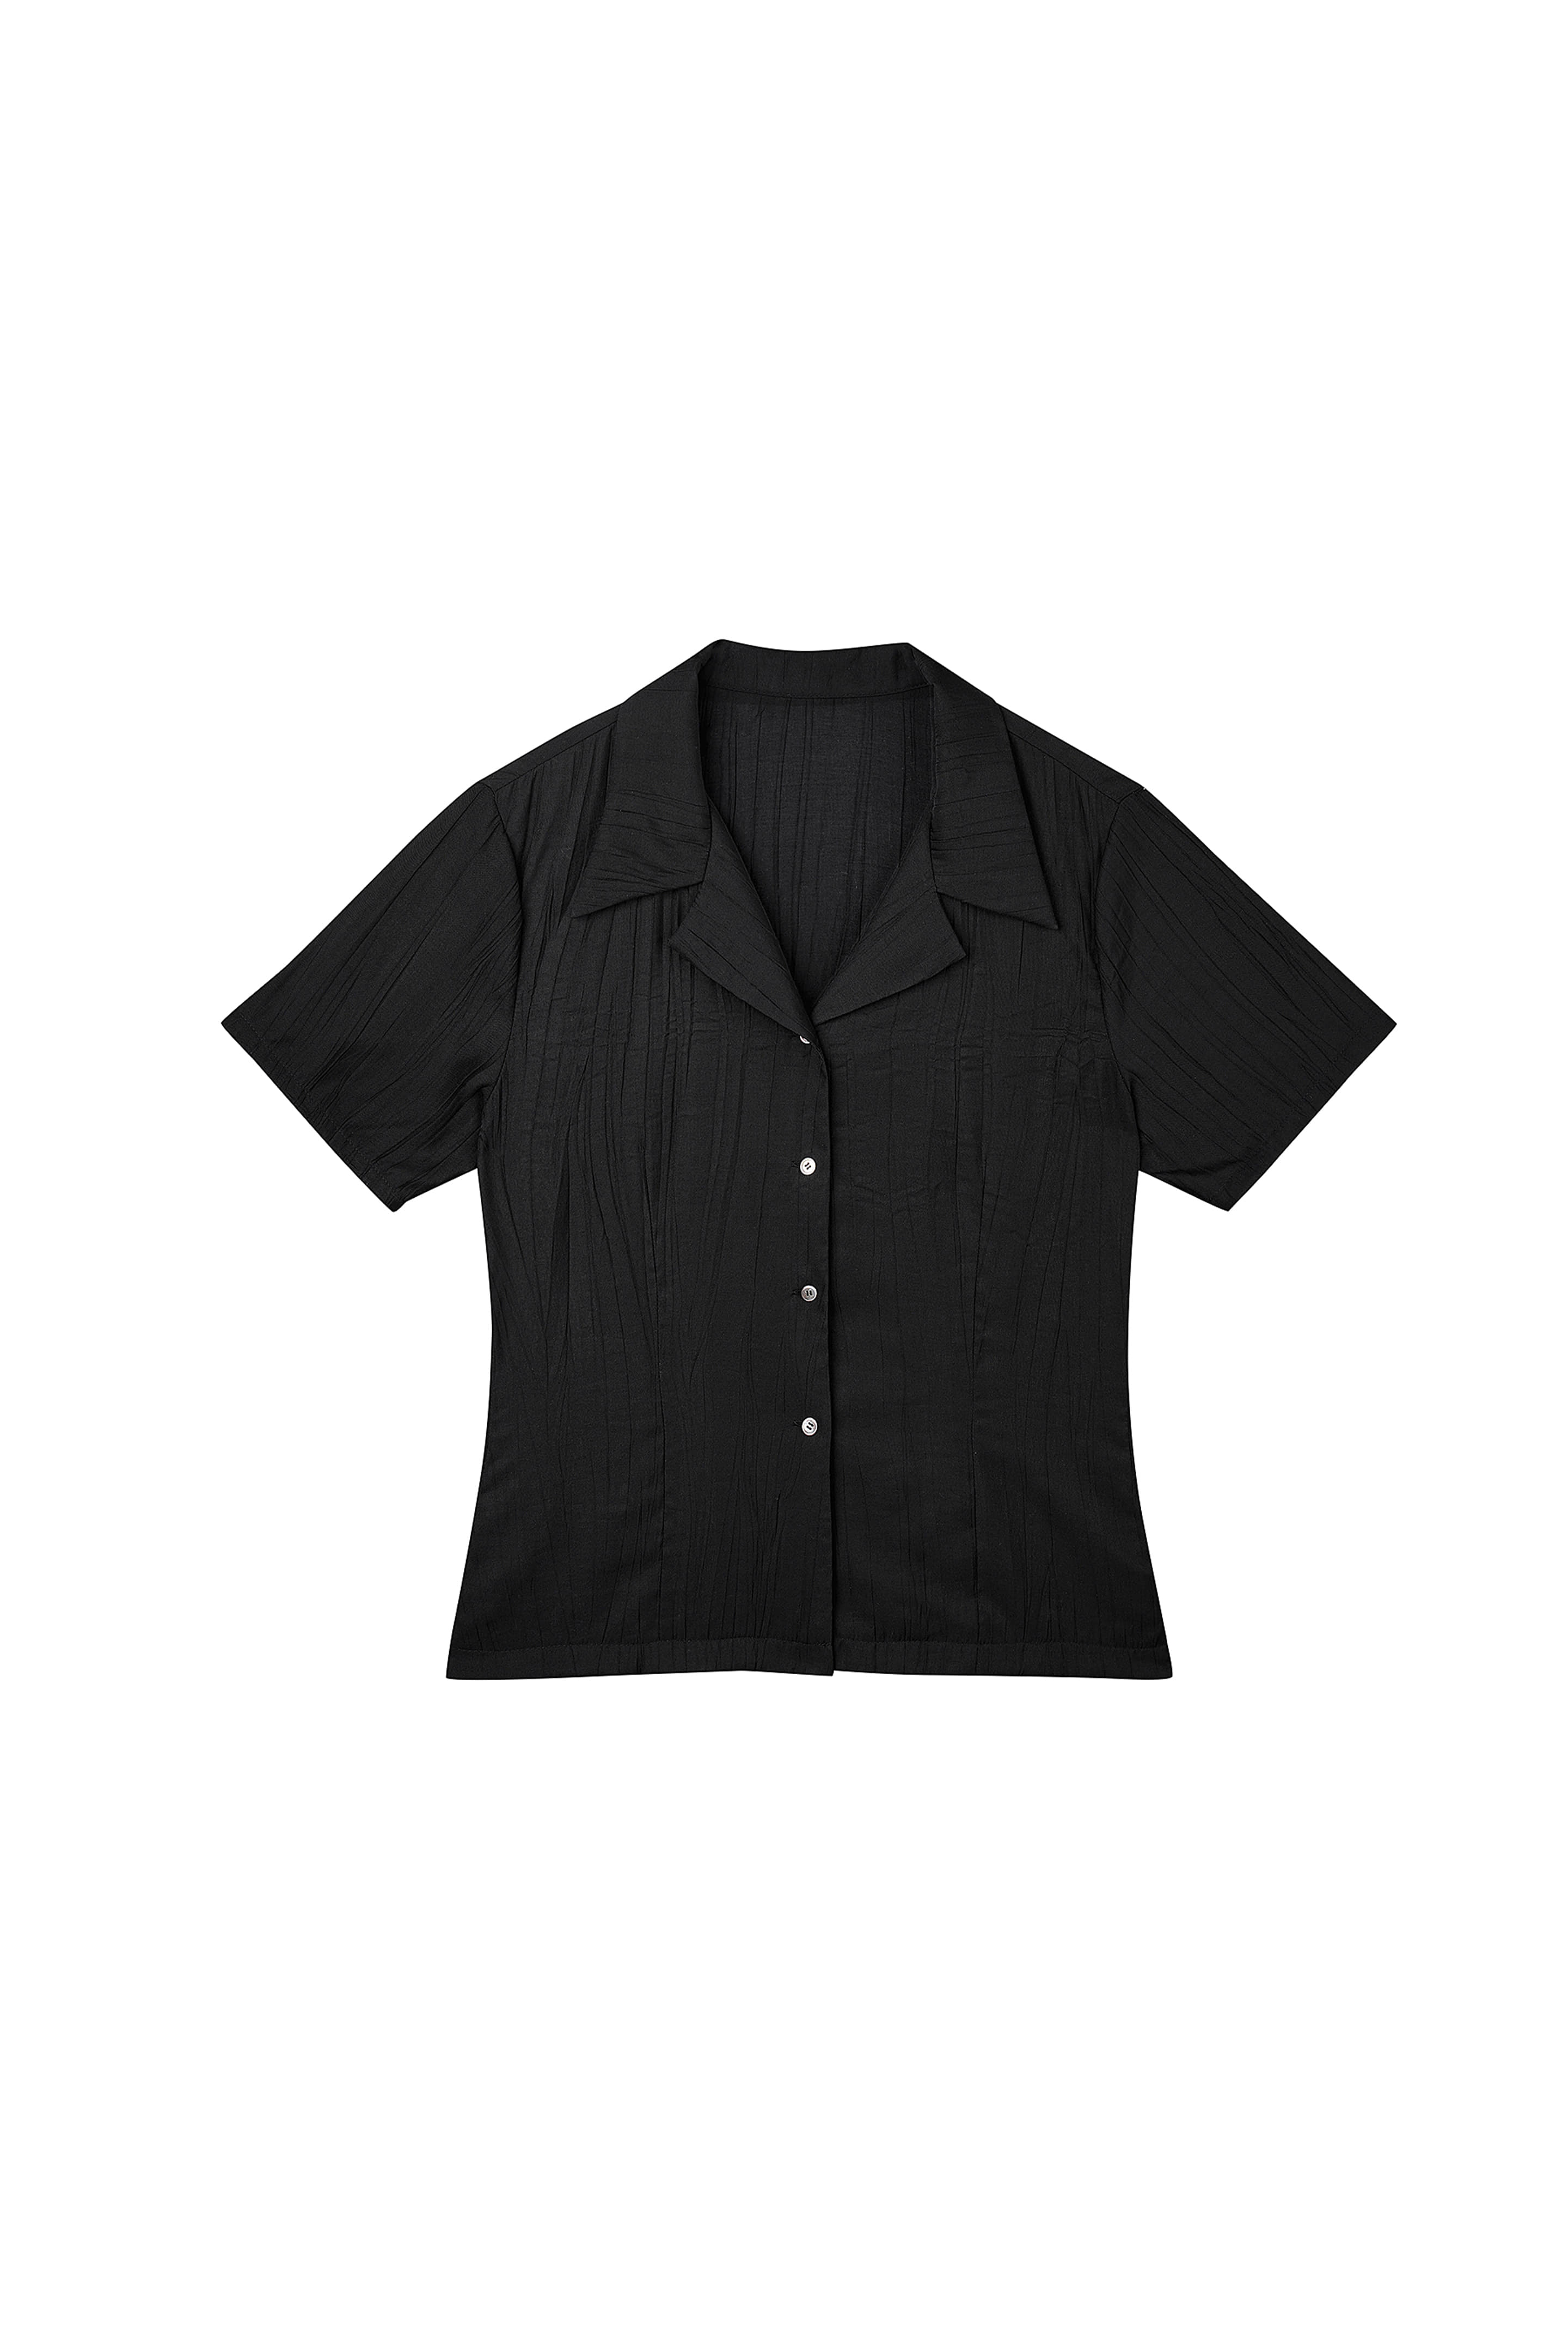 Delphy Shirt Black